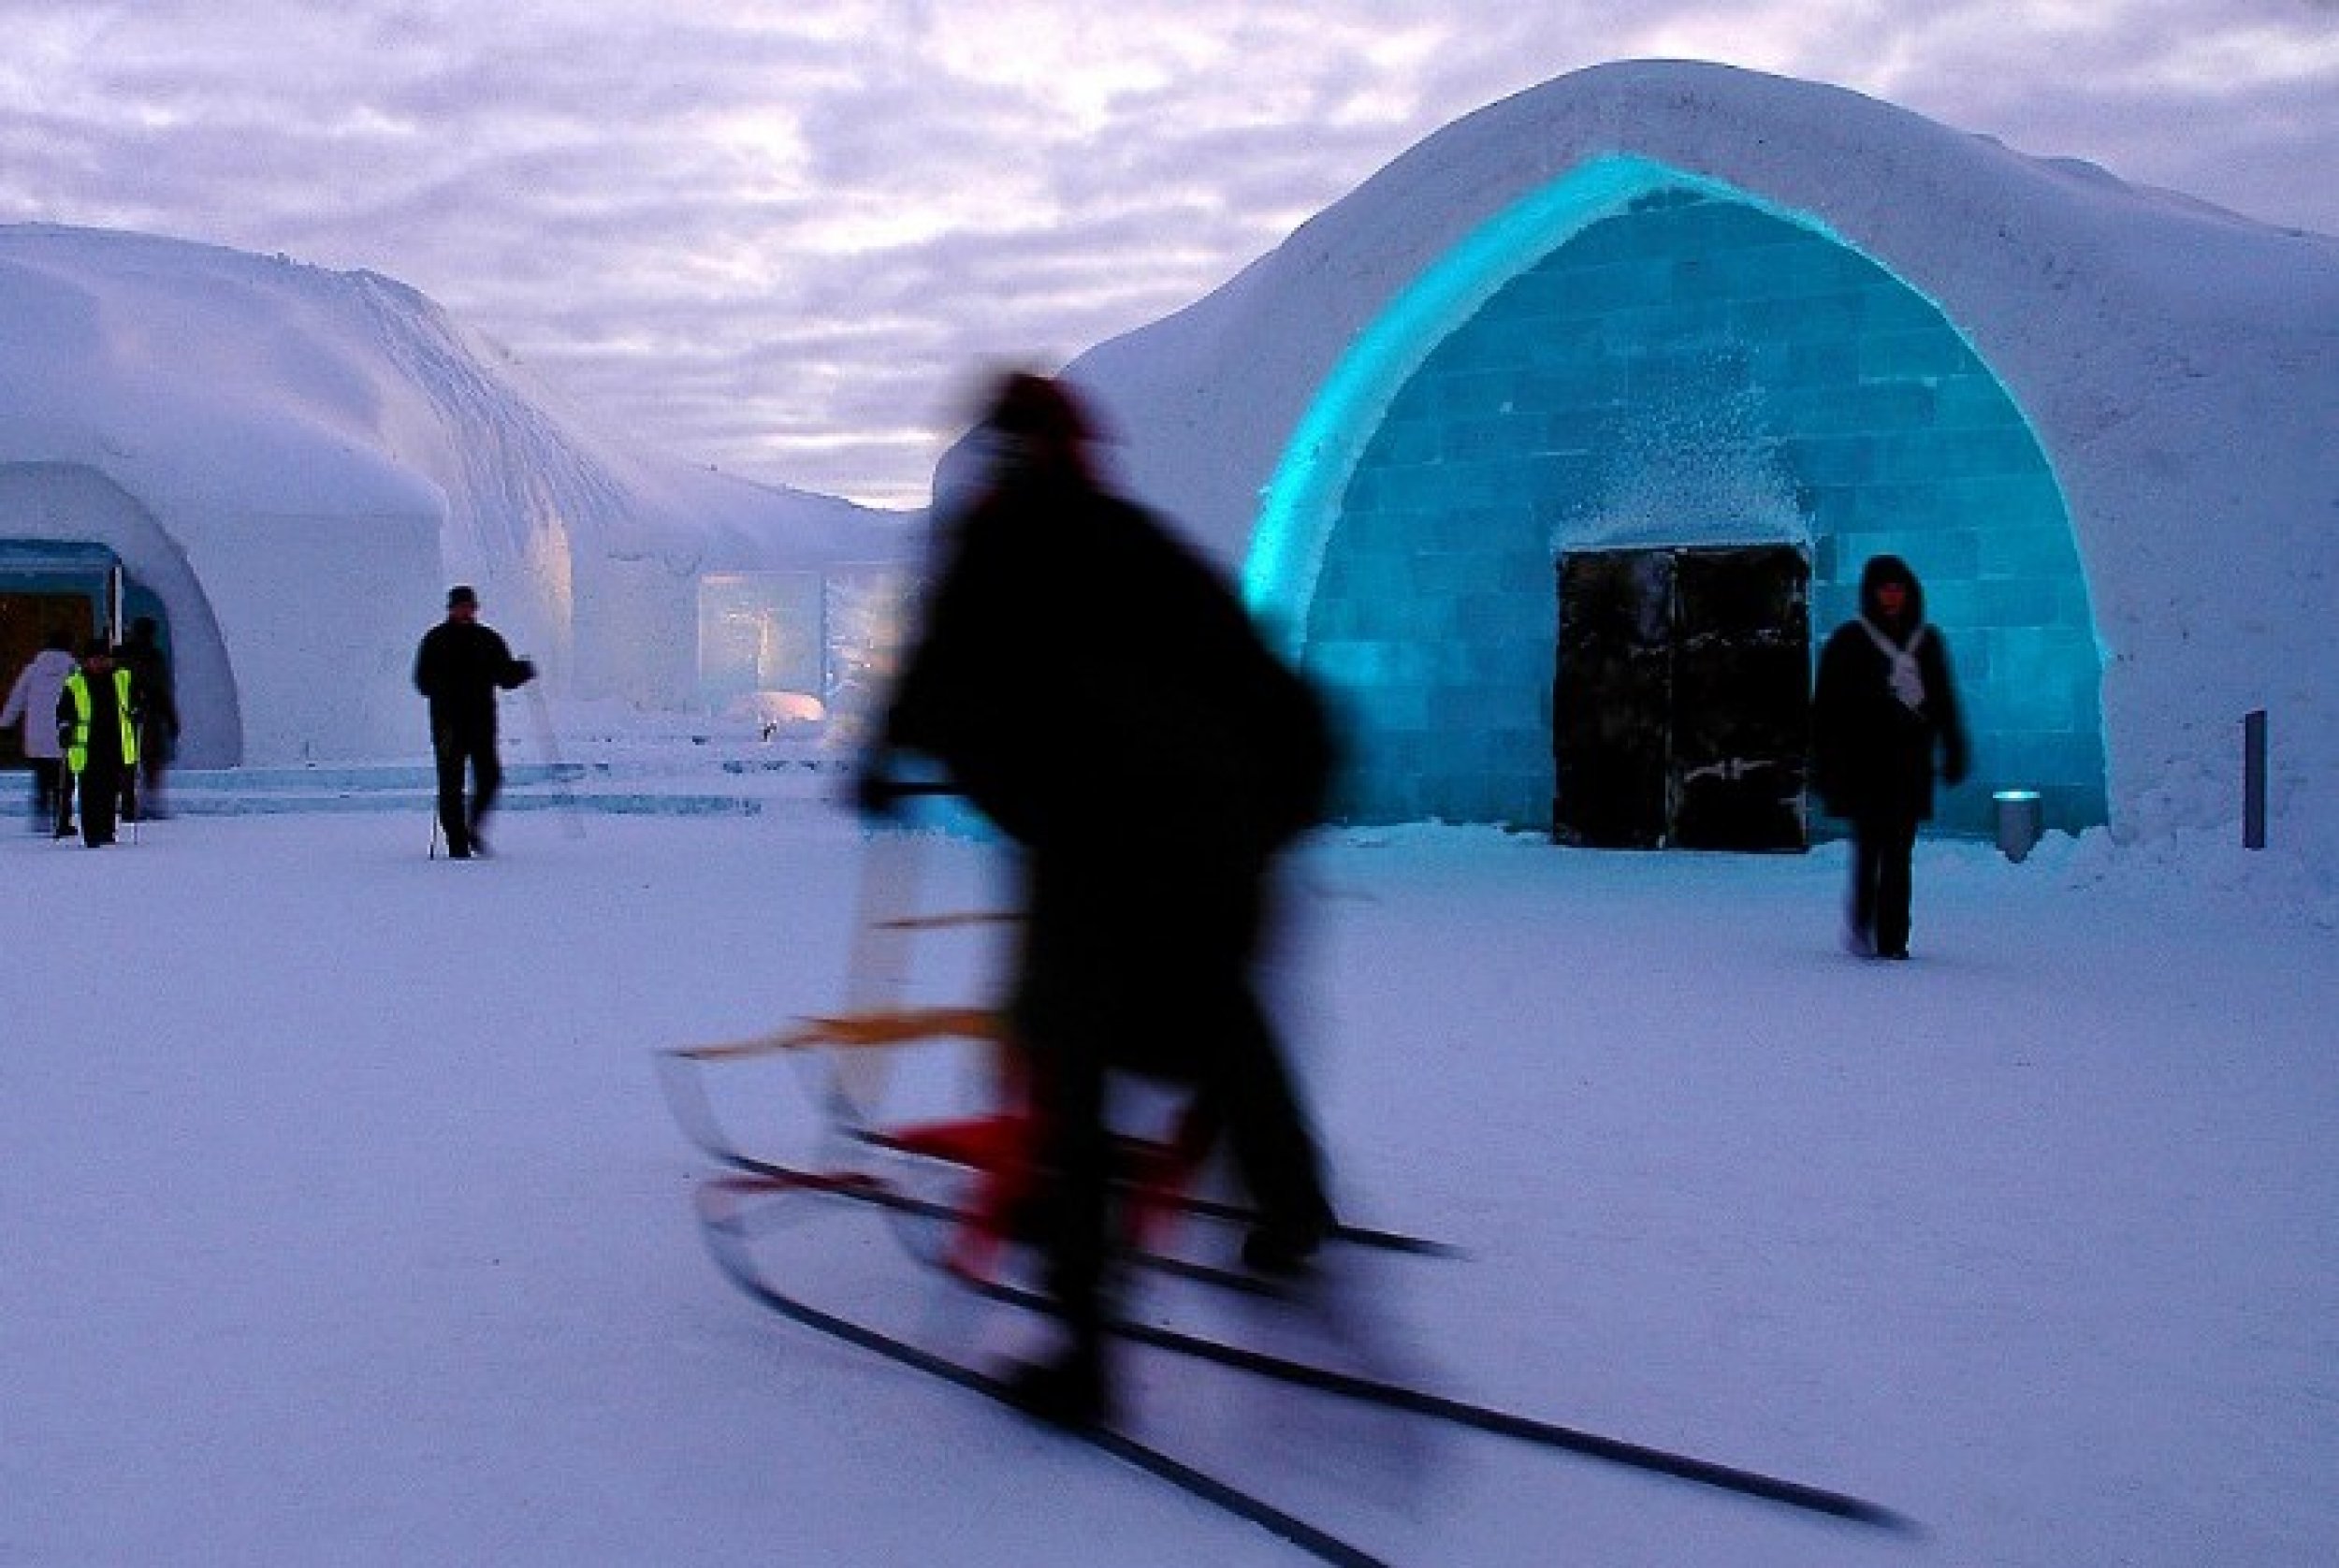 Icehotel in Jukkasjrvi, Swedish Lapland